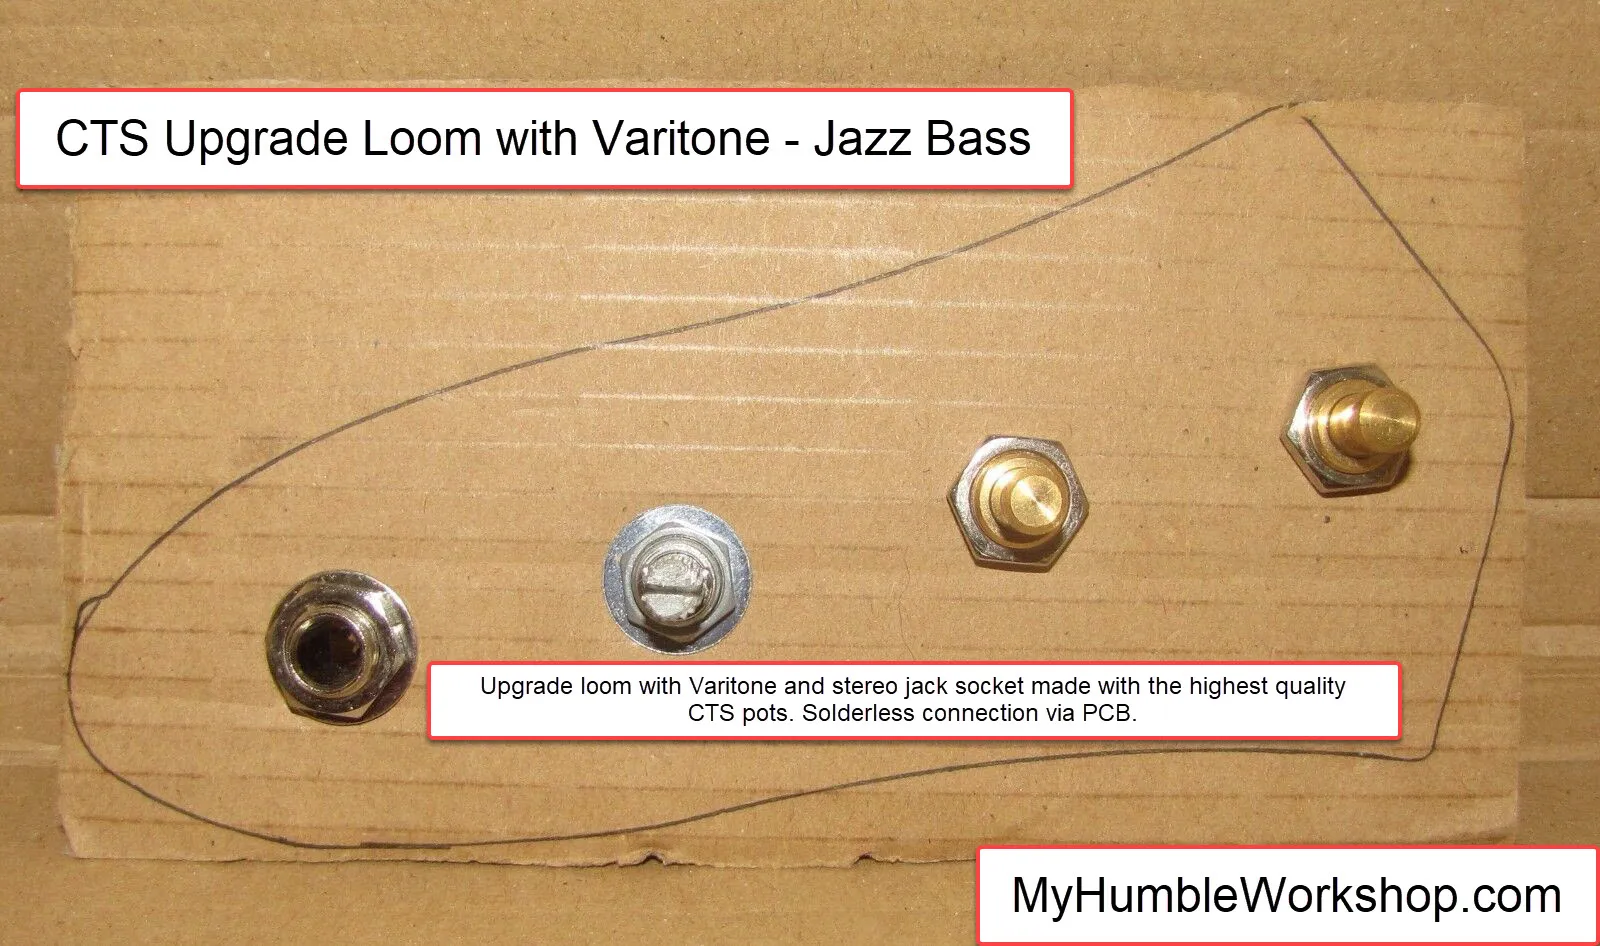 CTS upgrade loom with Varitone - J bass